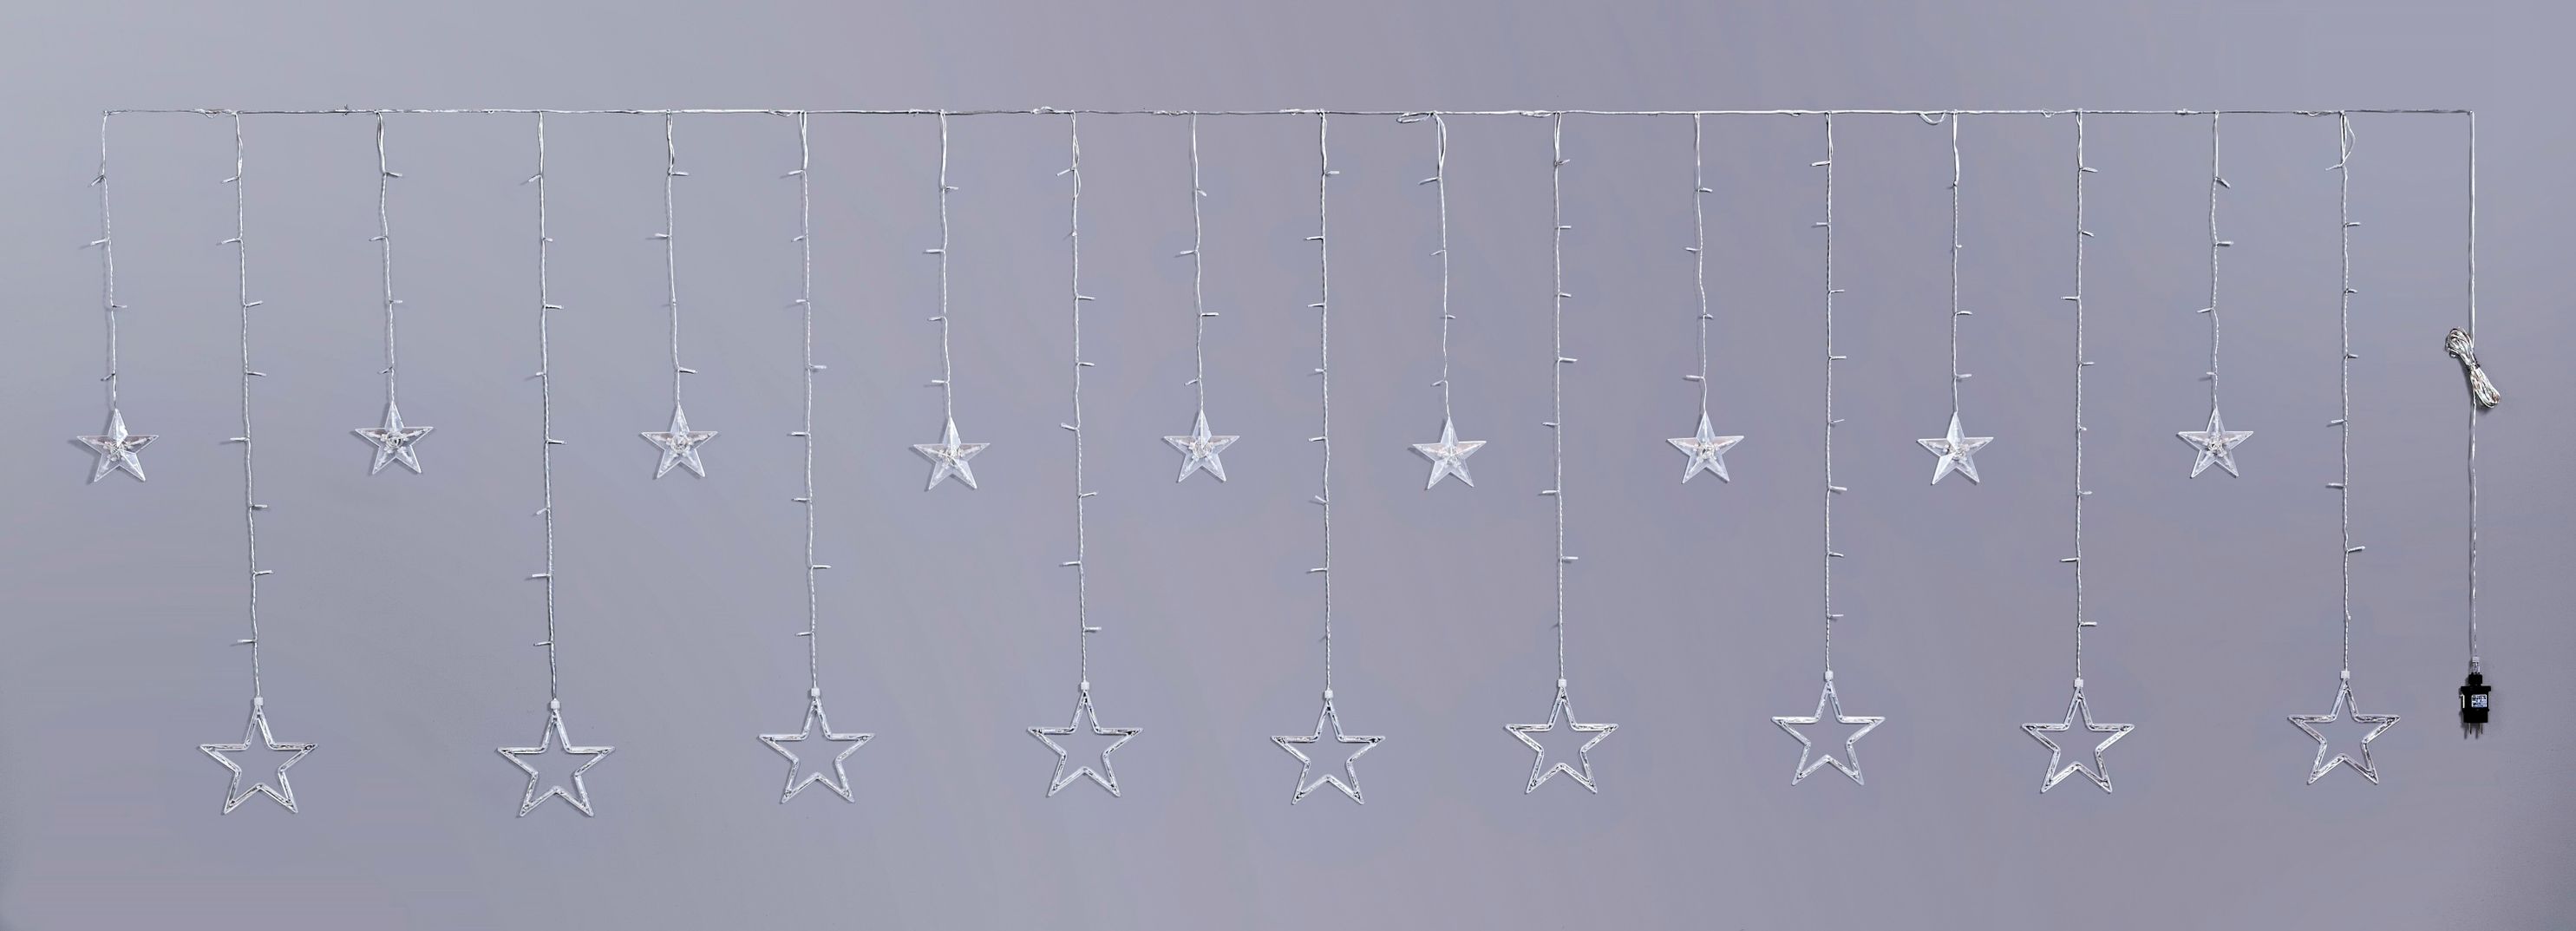 LED-Lichtervorhang Sternentraum, 5 Meter bestellen | Weltbild.de